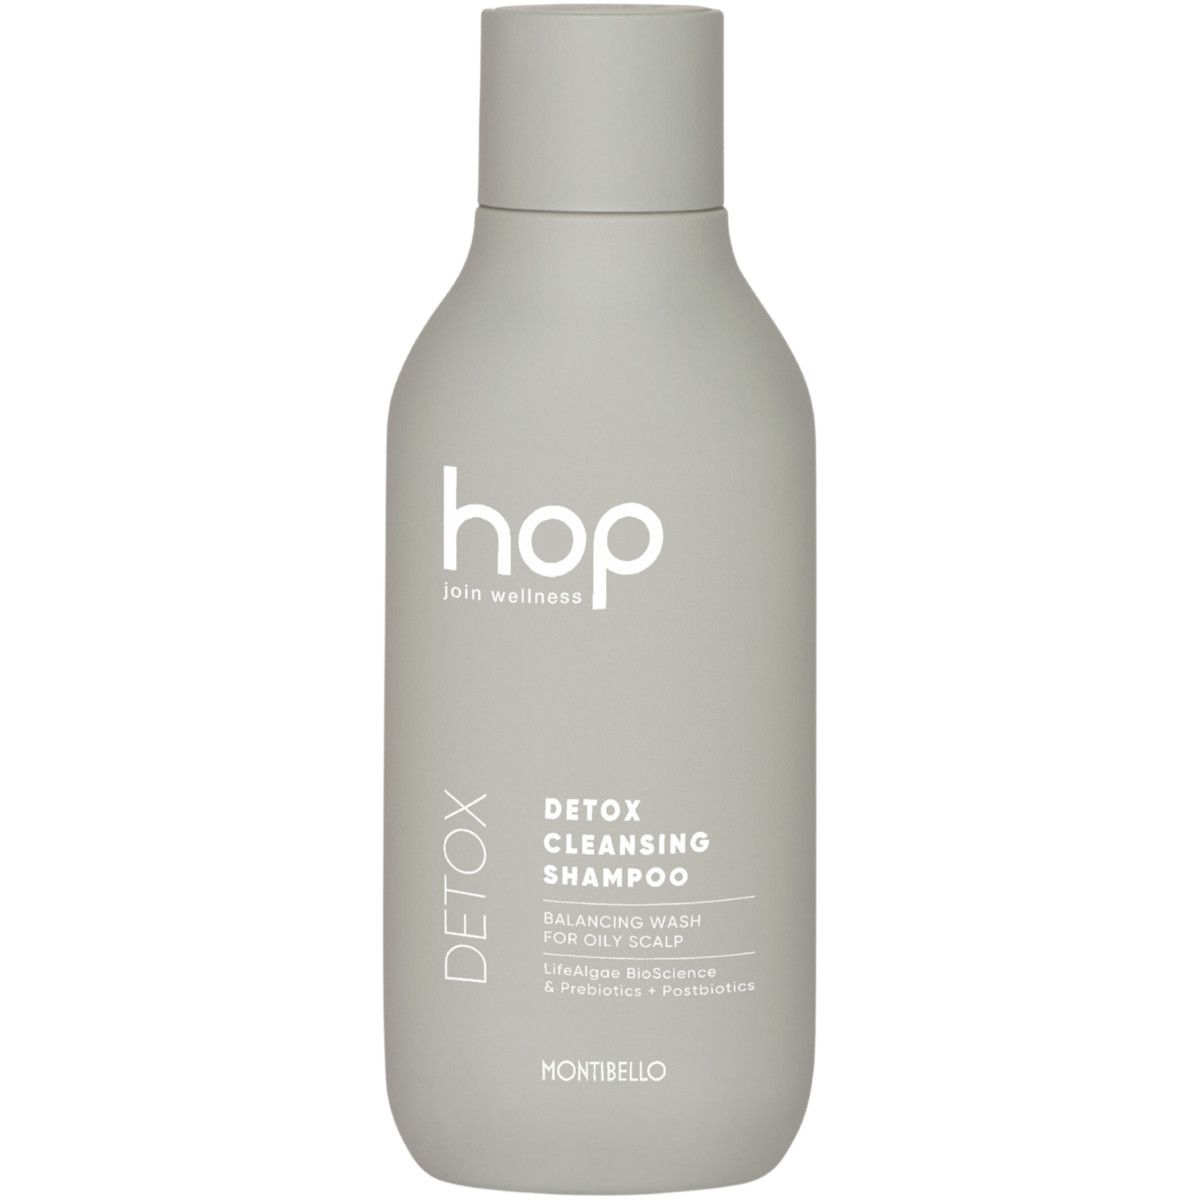 Montibello HOP Detox Cleansing - delikatny szampon oczyszczający, 300ml